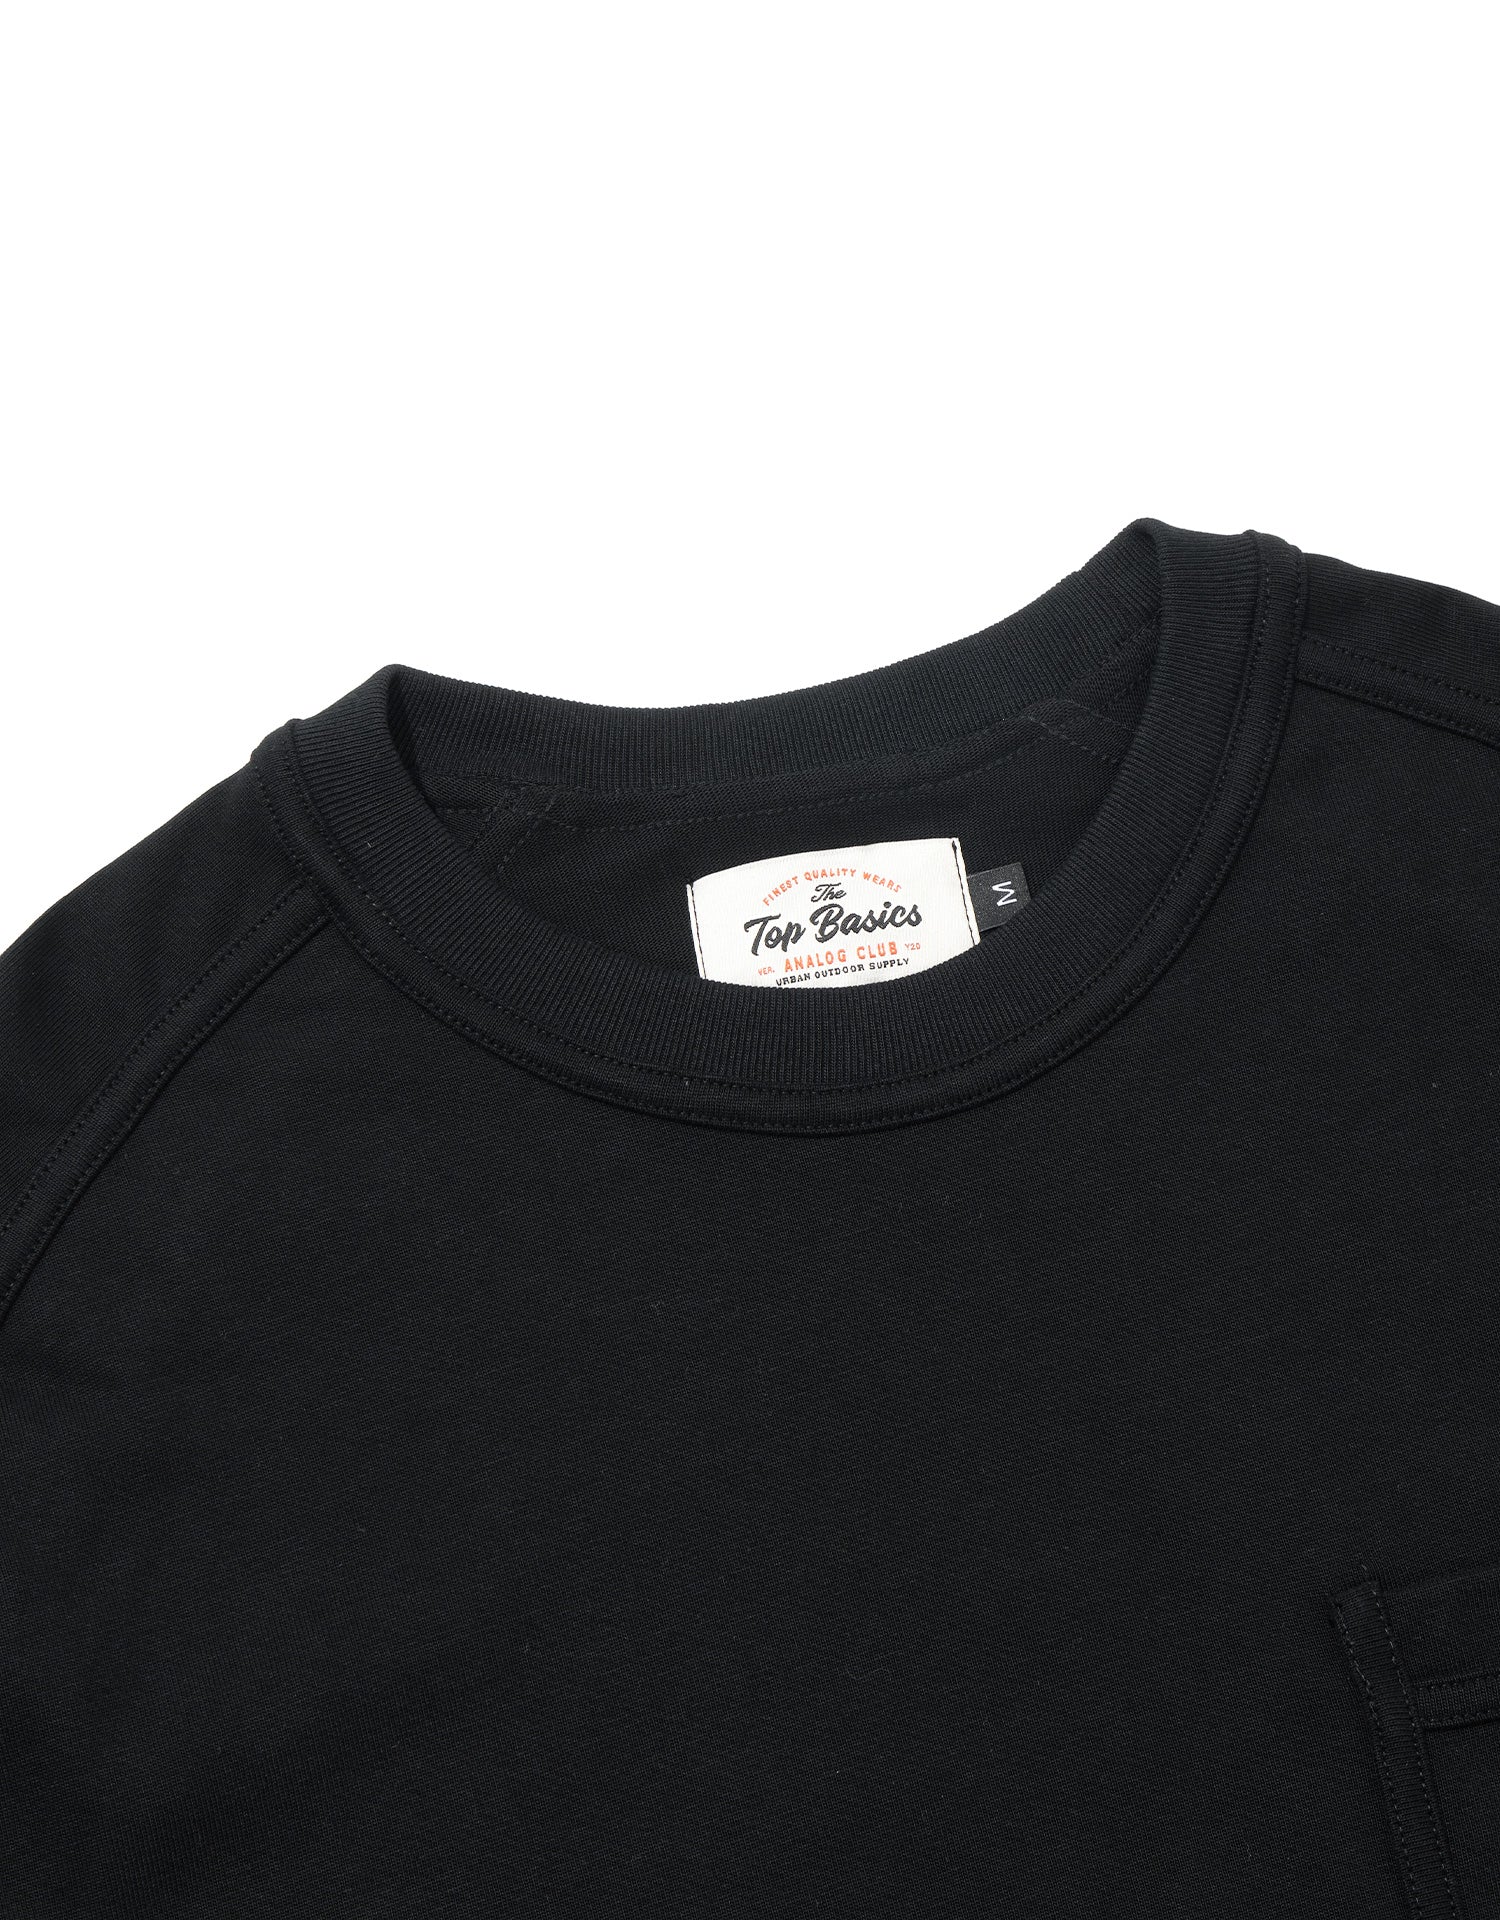 TopBasics Double Stitched Seam T-Shirt